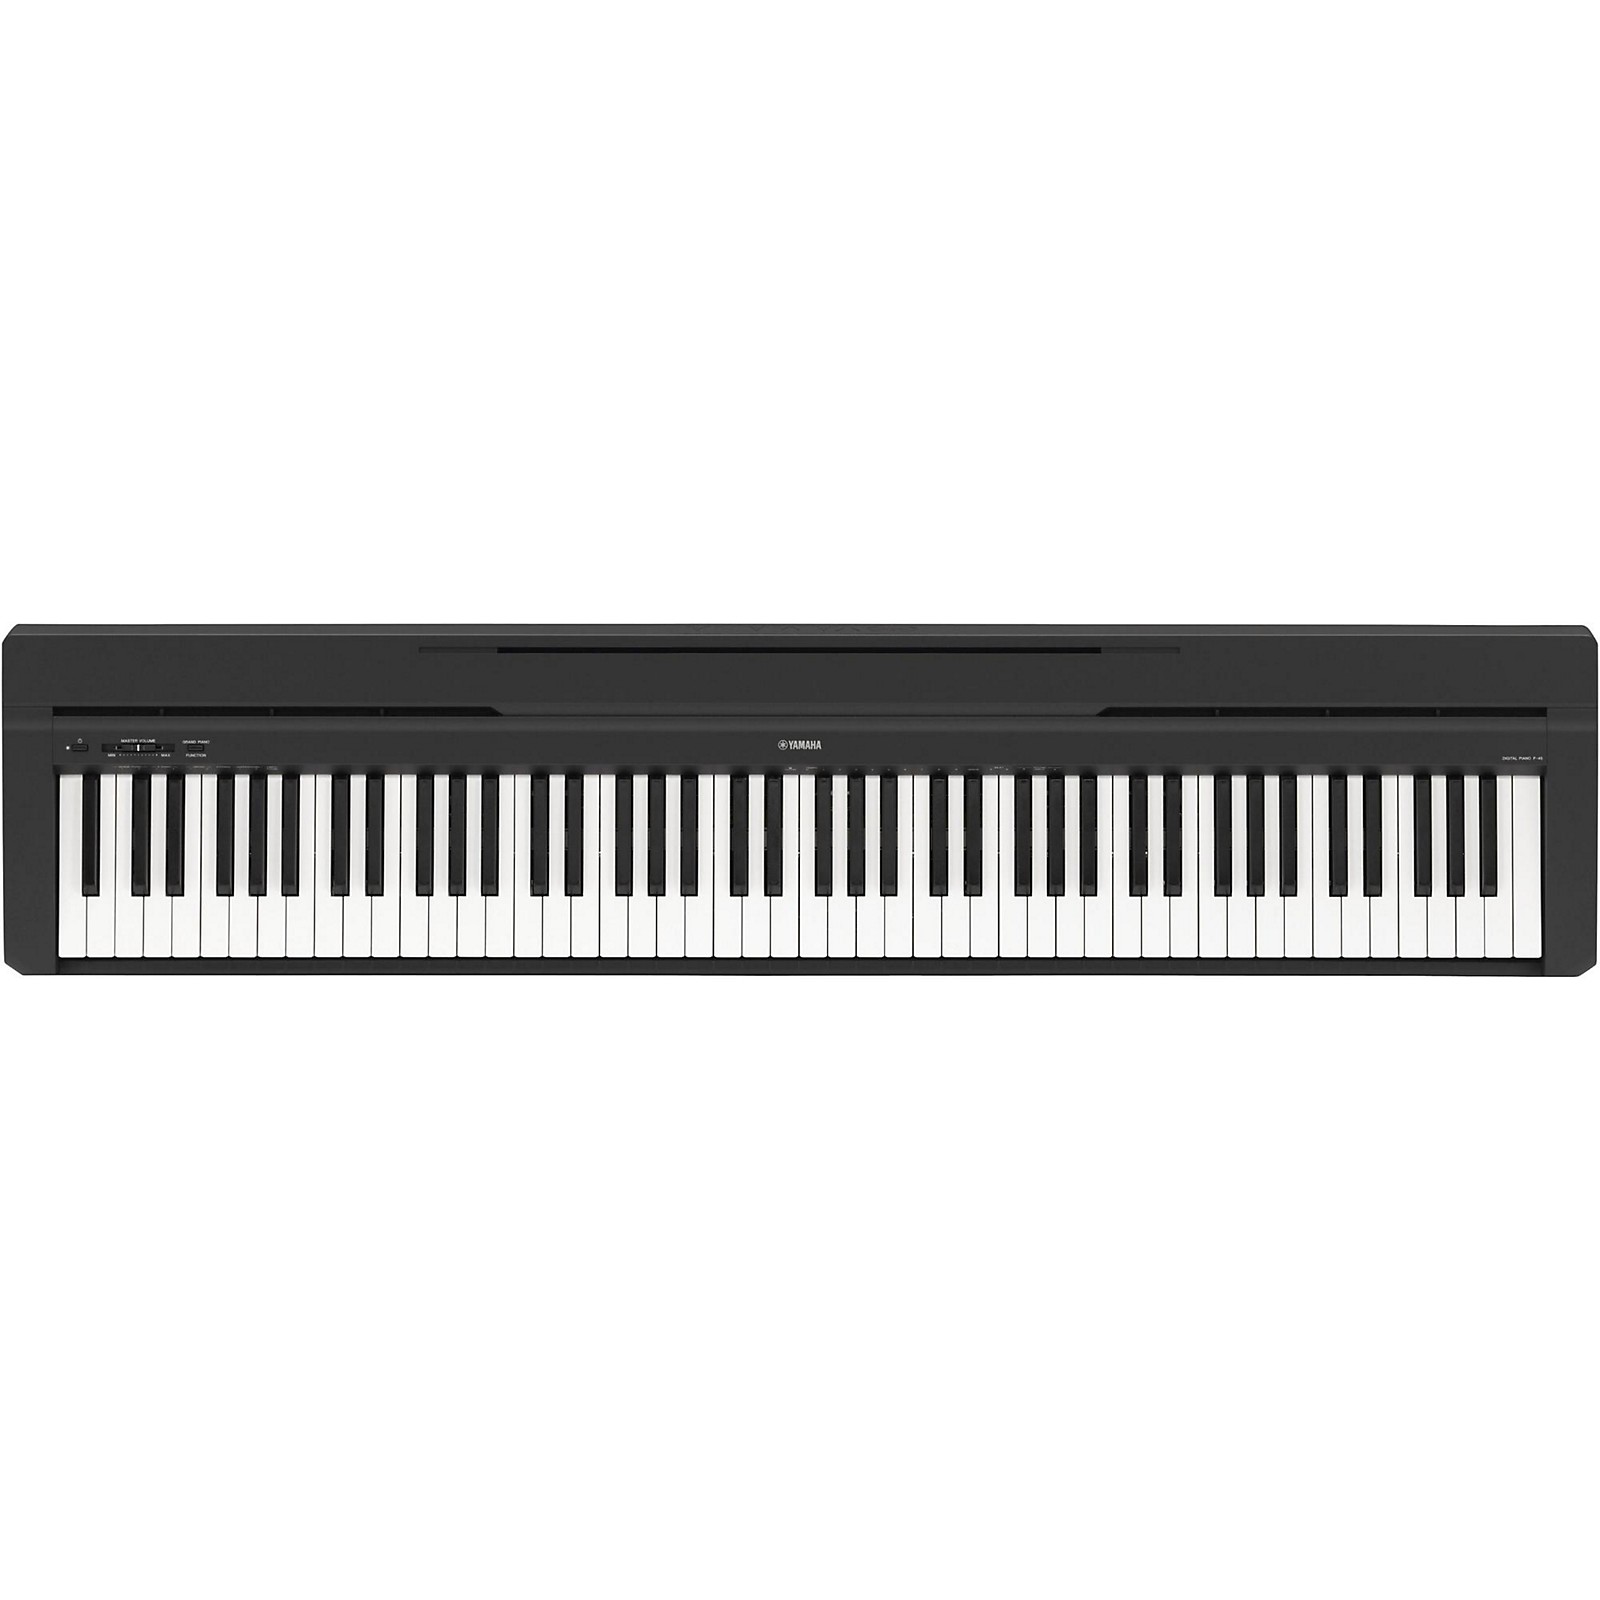 keyboard piano 88 keys weighted